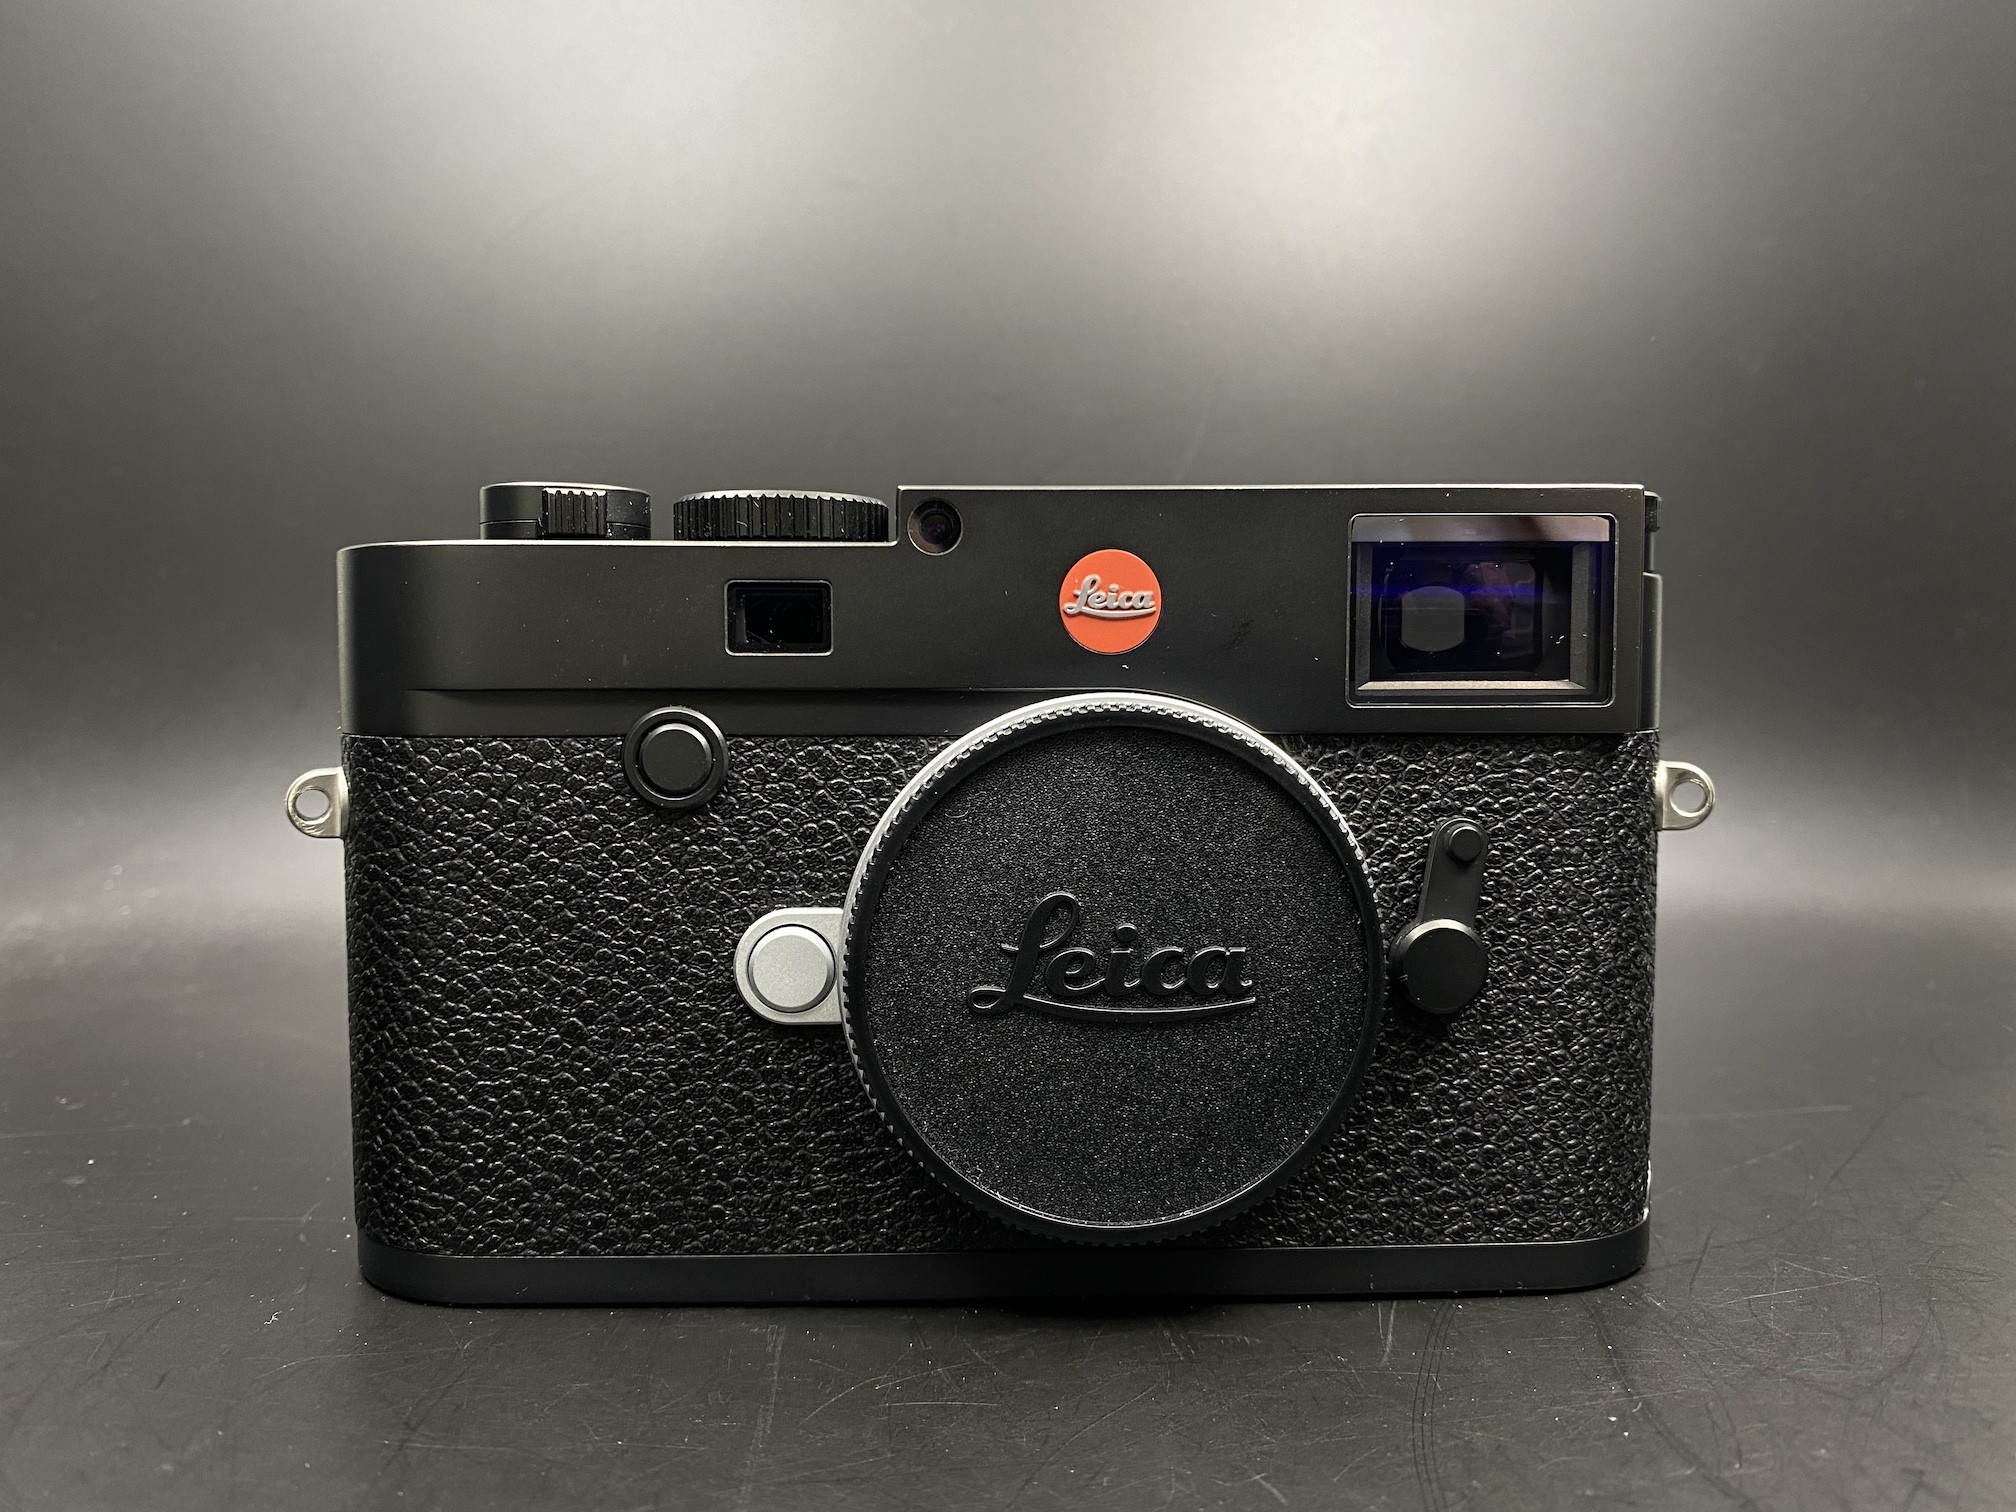 Leica M10 Digital Rangefinder Camera (Black)